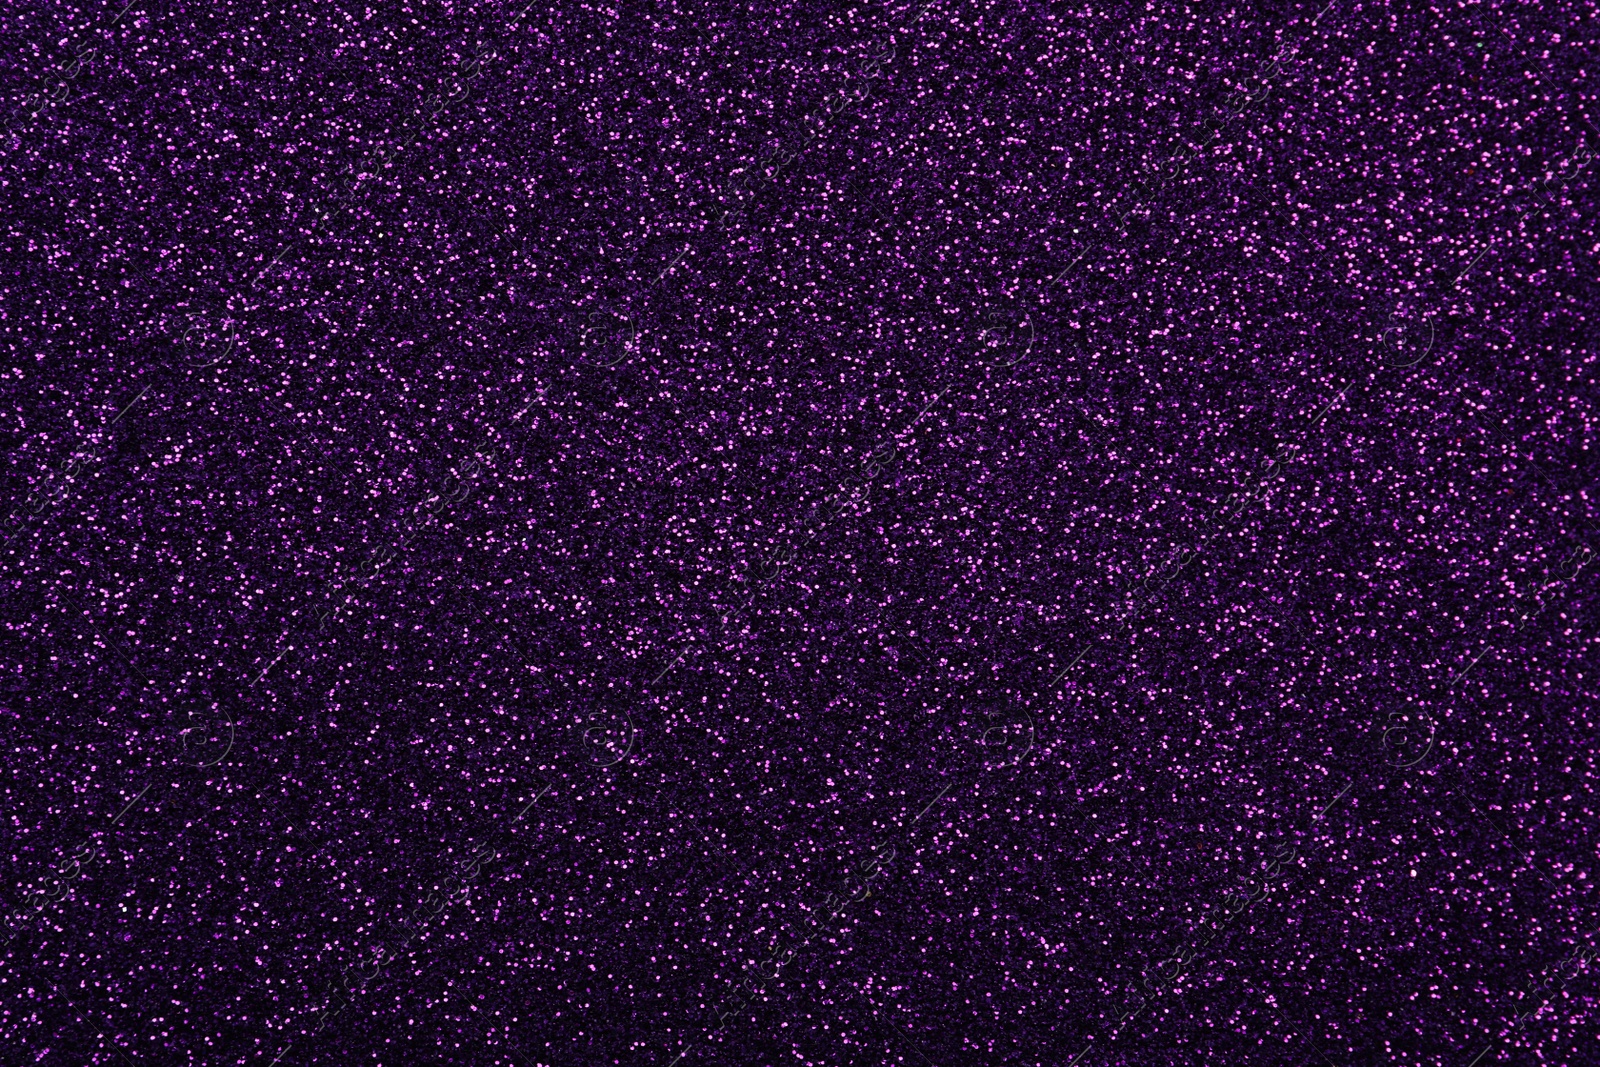 Photo of Shiny dark purple glitter as background, closeup